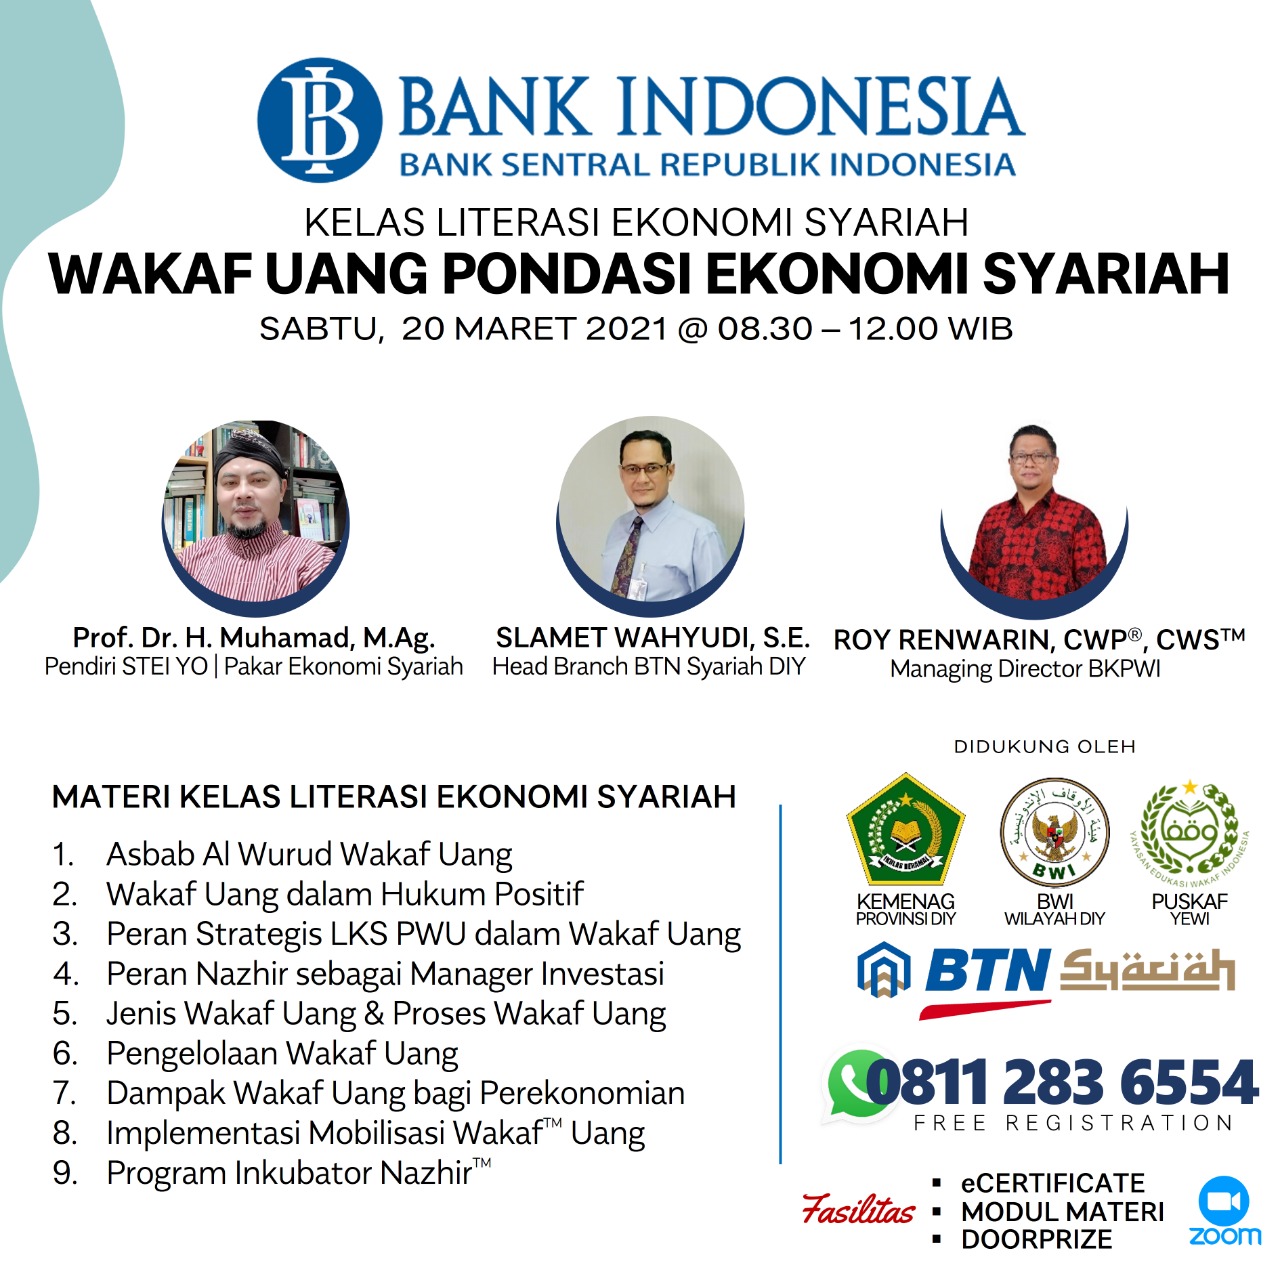 KELAS LITERASI EKONOMI SYARIAH BANK INDONESIA